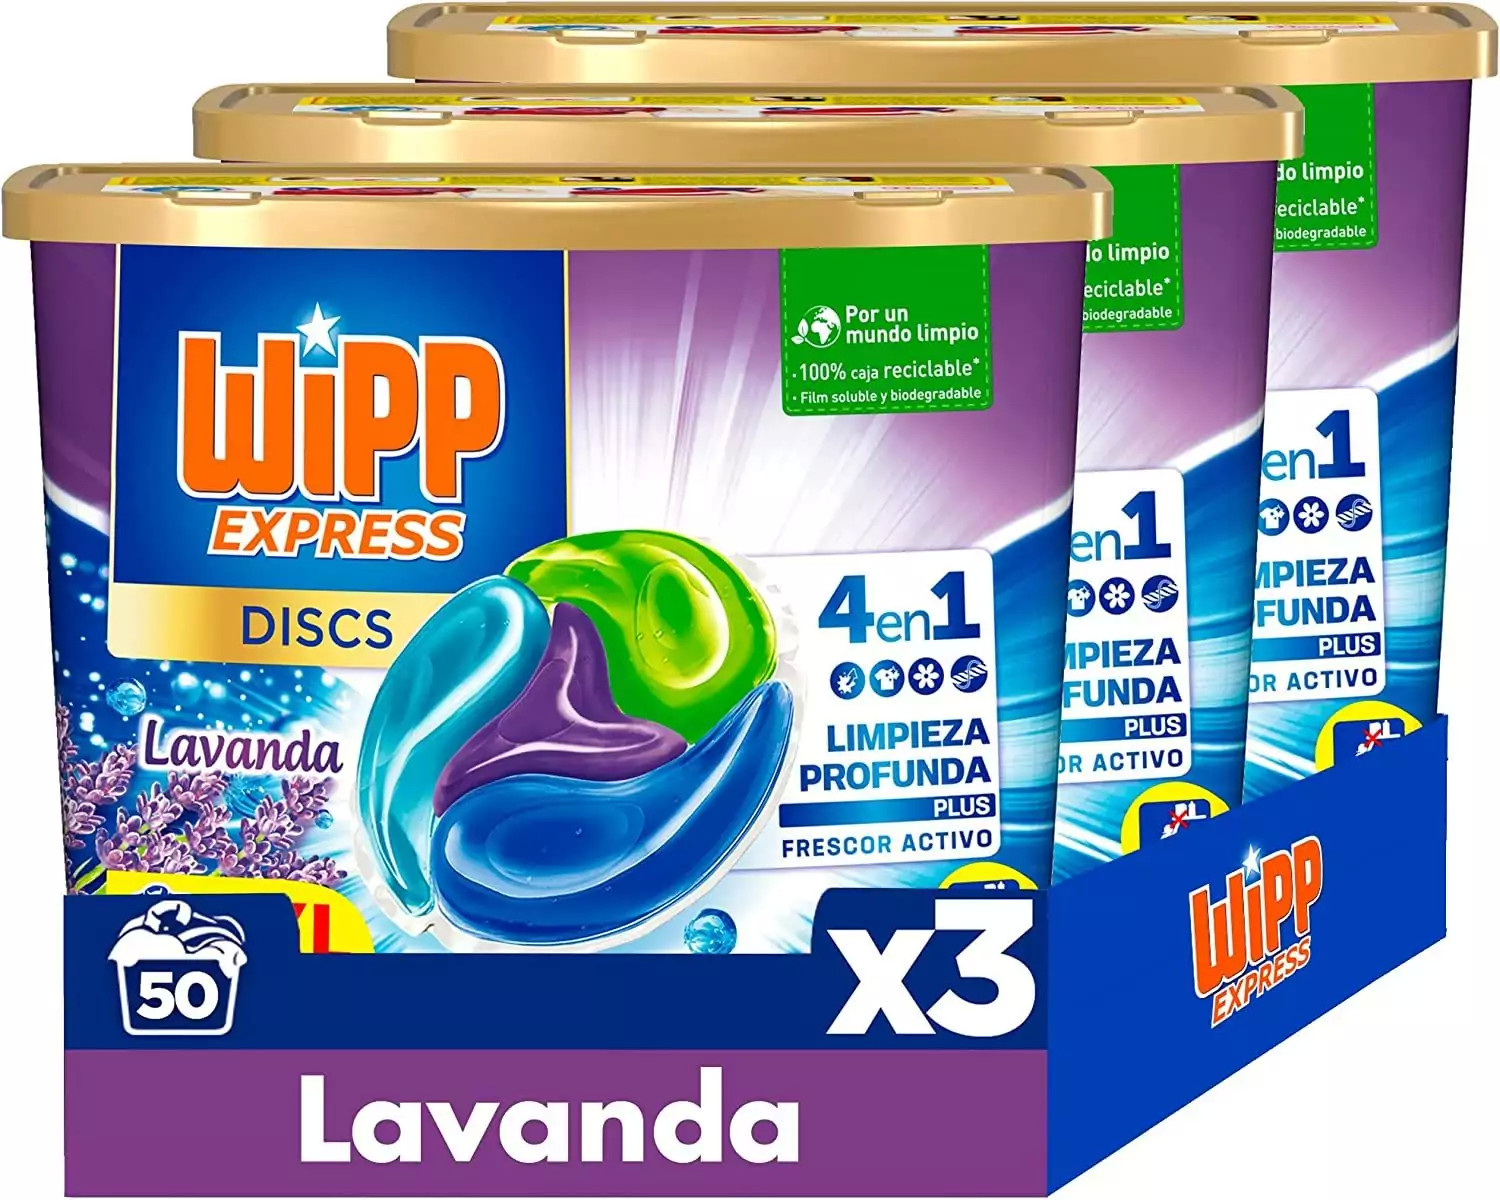 WIPP EXPRESS Frescor Activo Detergente para ropa 80 lavados